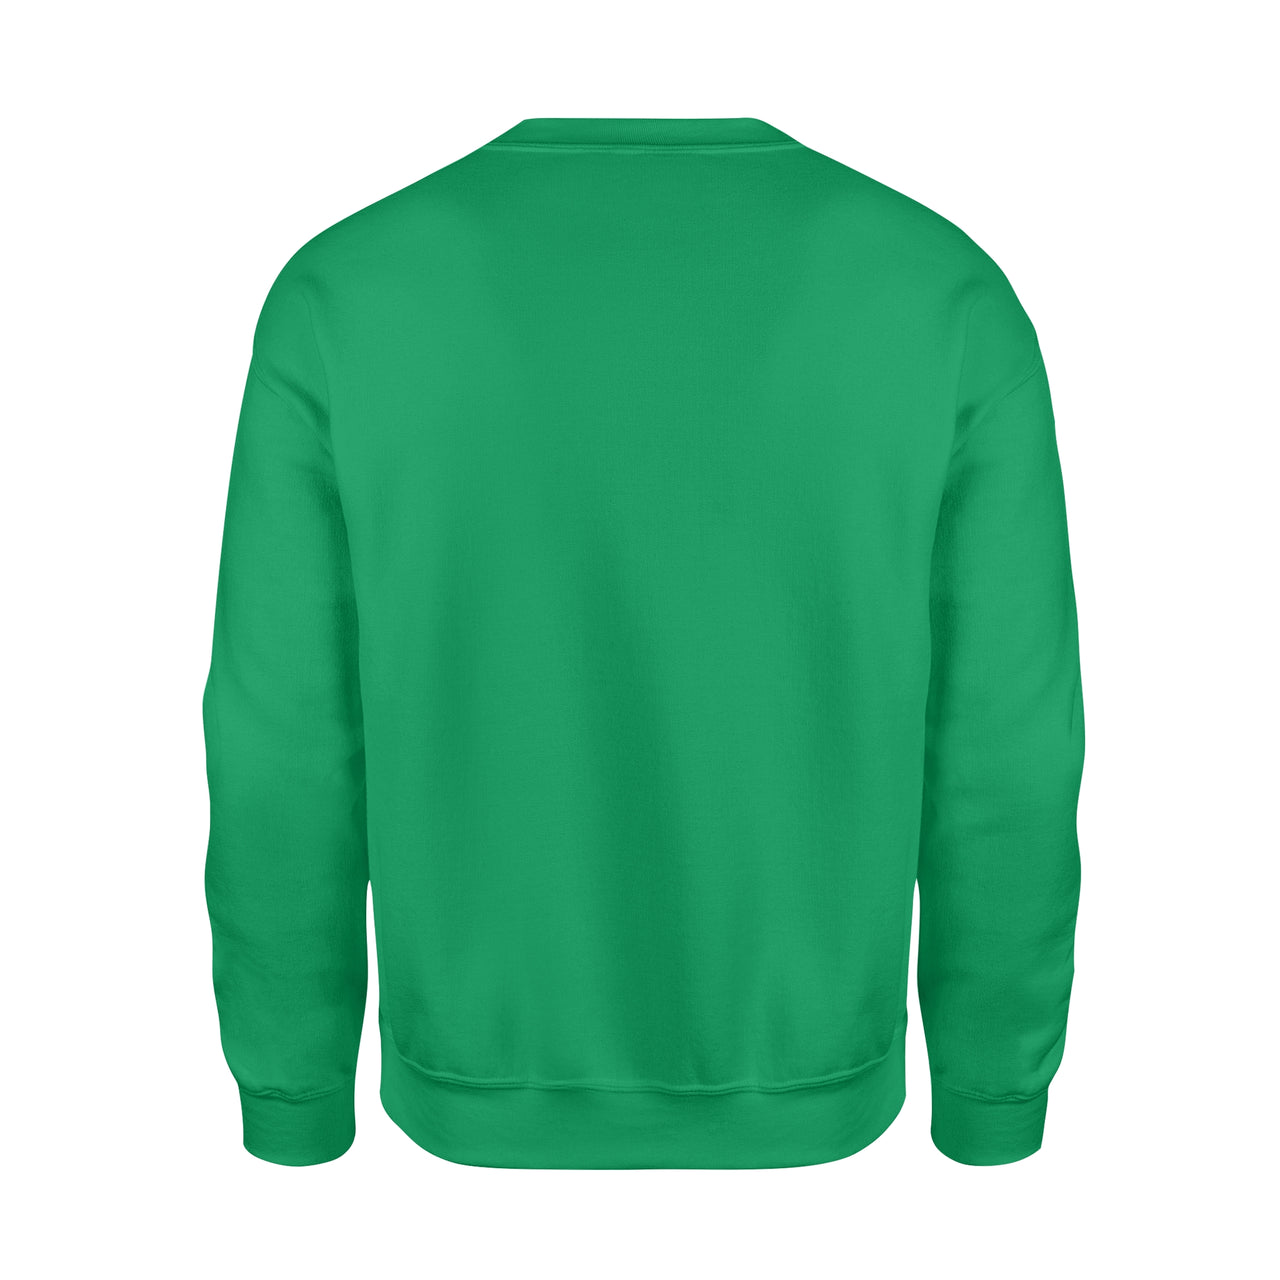 Personalized St. Patrick Gift Idea - Cool Bulldog Is Smoking - Standard Crew Neck Sweatshirt